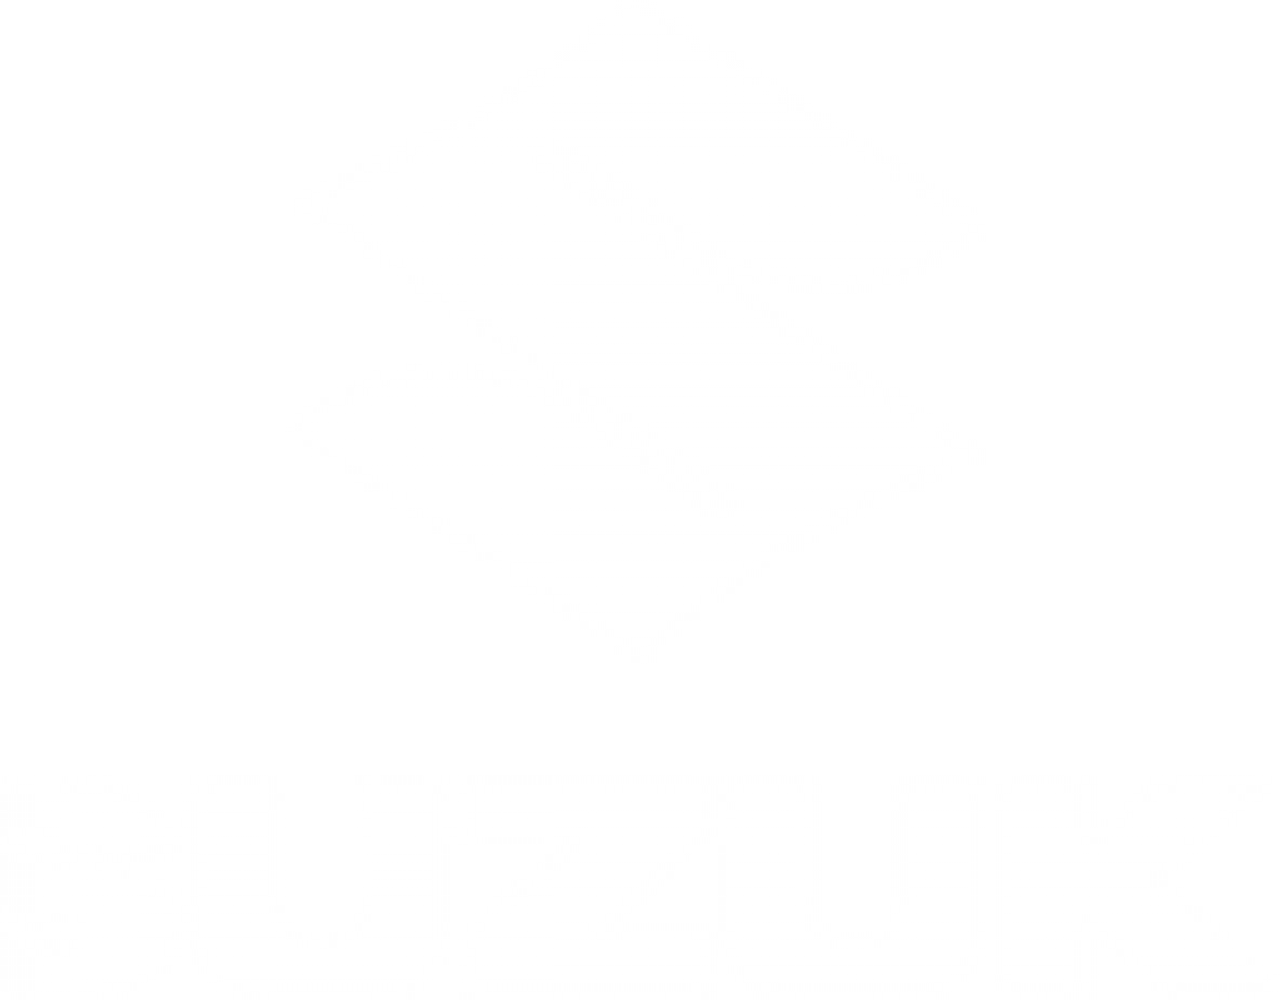 Collection of Suzuki Logo PNG. | PlusPNG